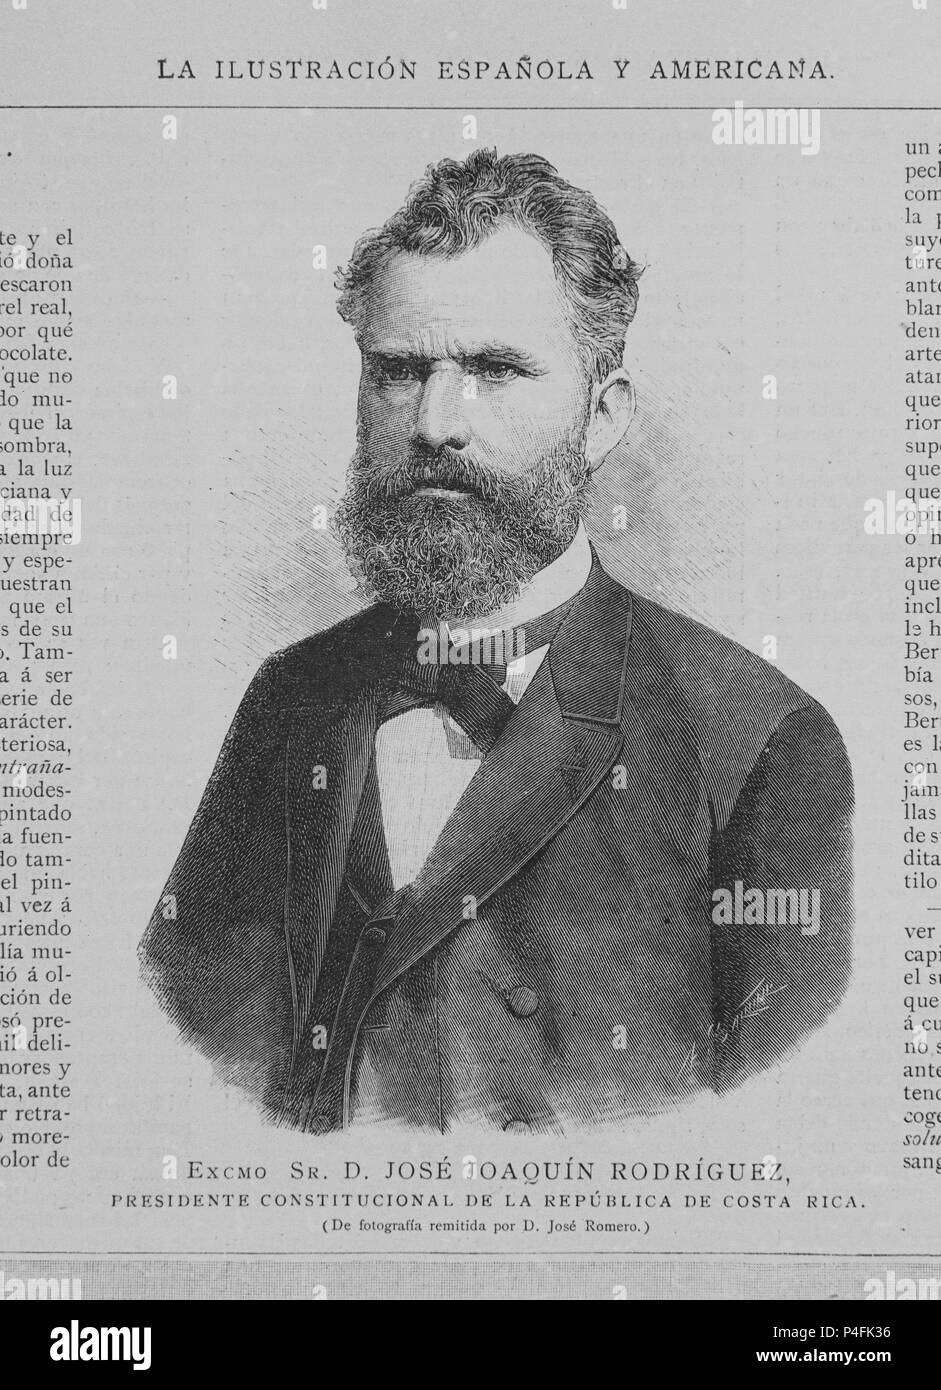 DON JOSE JOAQUIN RODRIGUEZ (1838-1917) PRESIDENTE CONSTITUCIONAL DE LA REPUBLICA DE COSTA RICA. Location: BIBLIOTECA NACIONAL-COLECCION, MADRID, SPAIN. Stock Photo